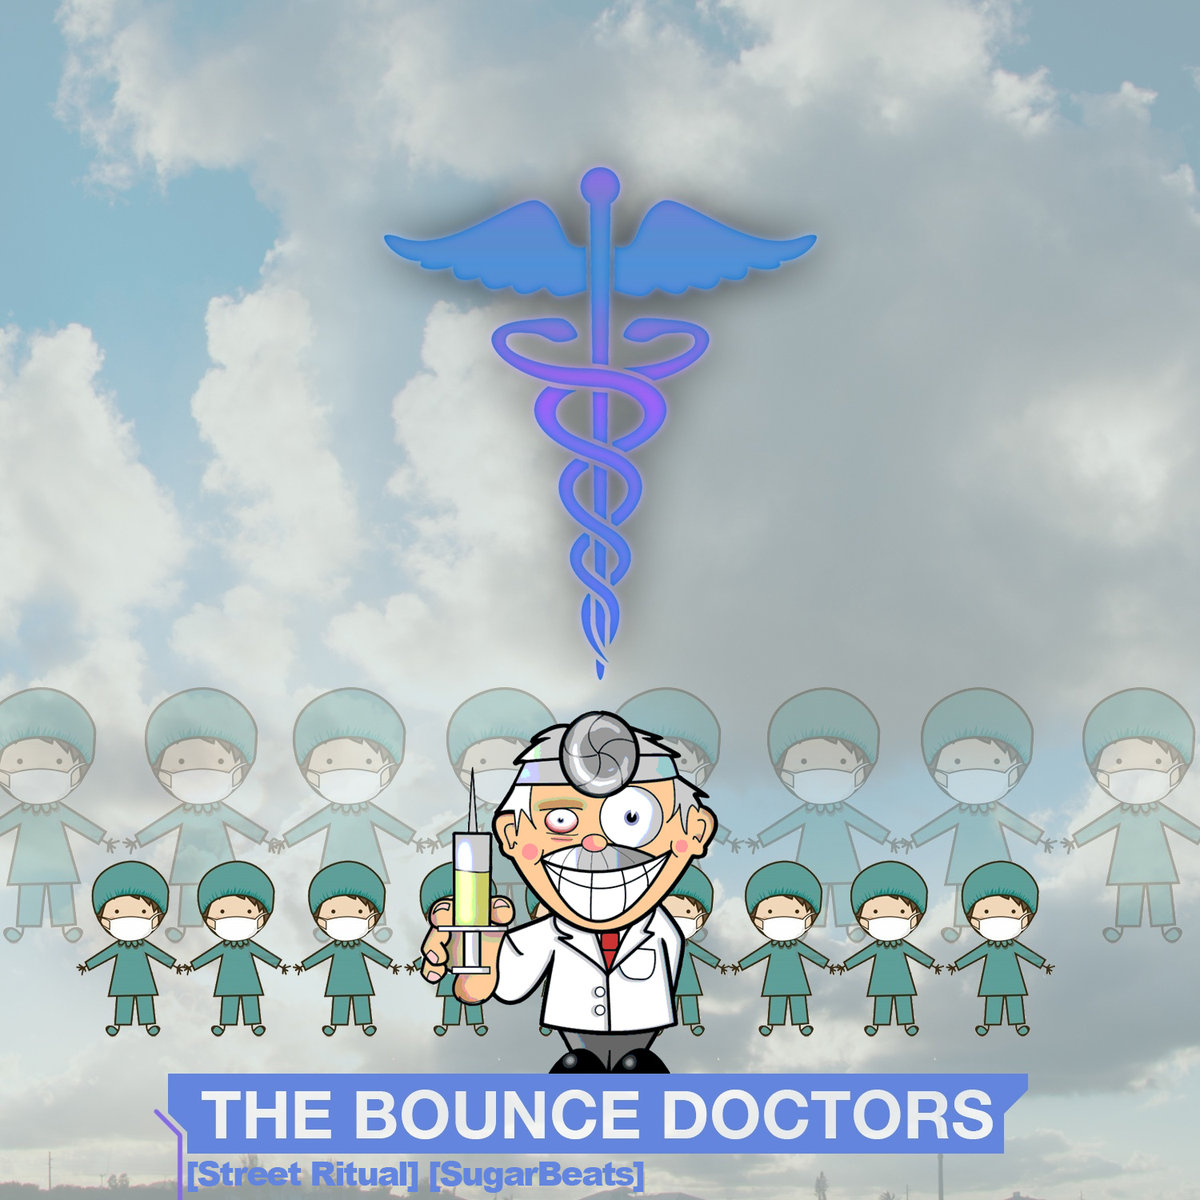 Profresher - Phenomenon @ 'The Bounce Doctors' album (bass, chillstep)